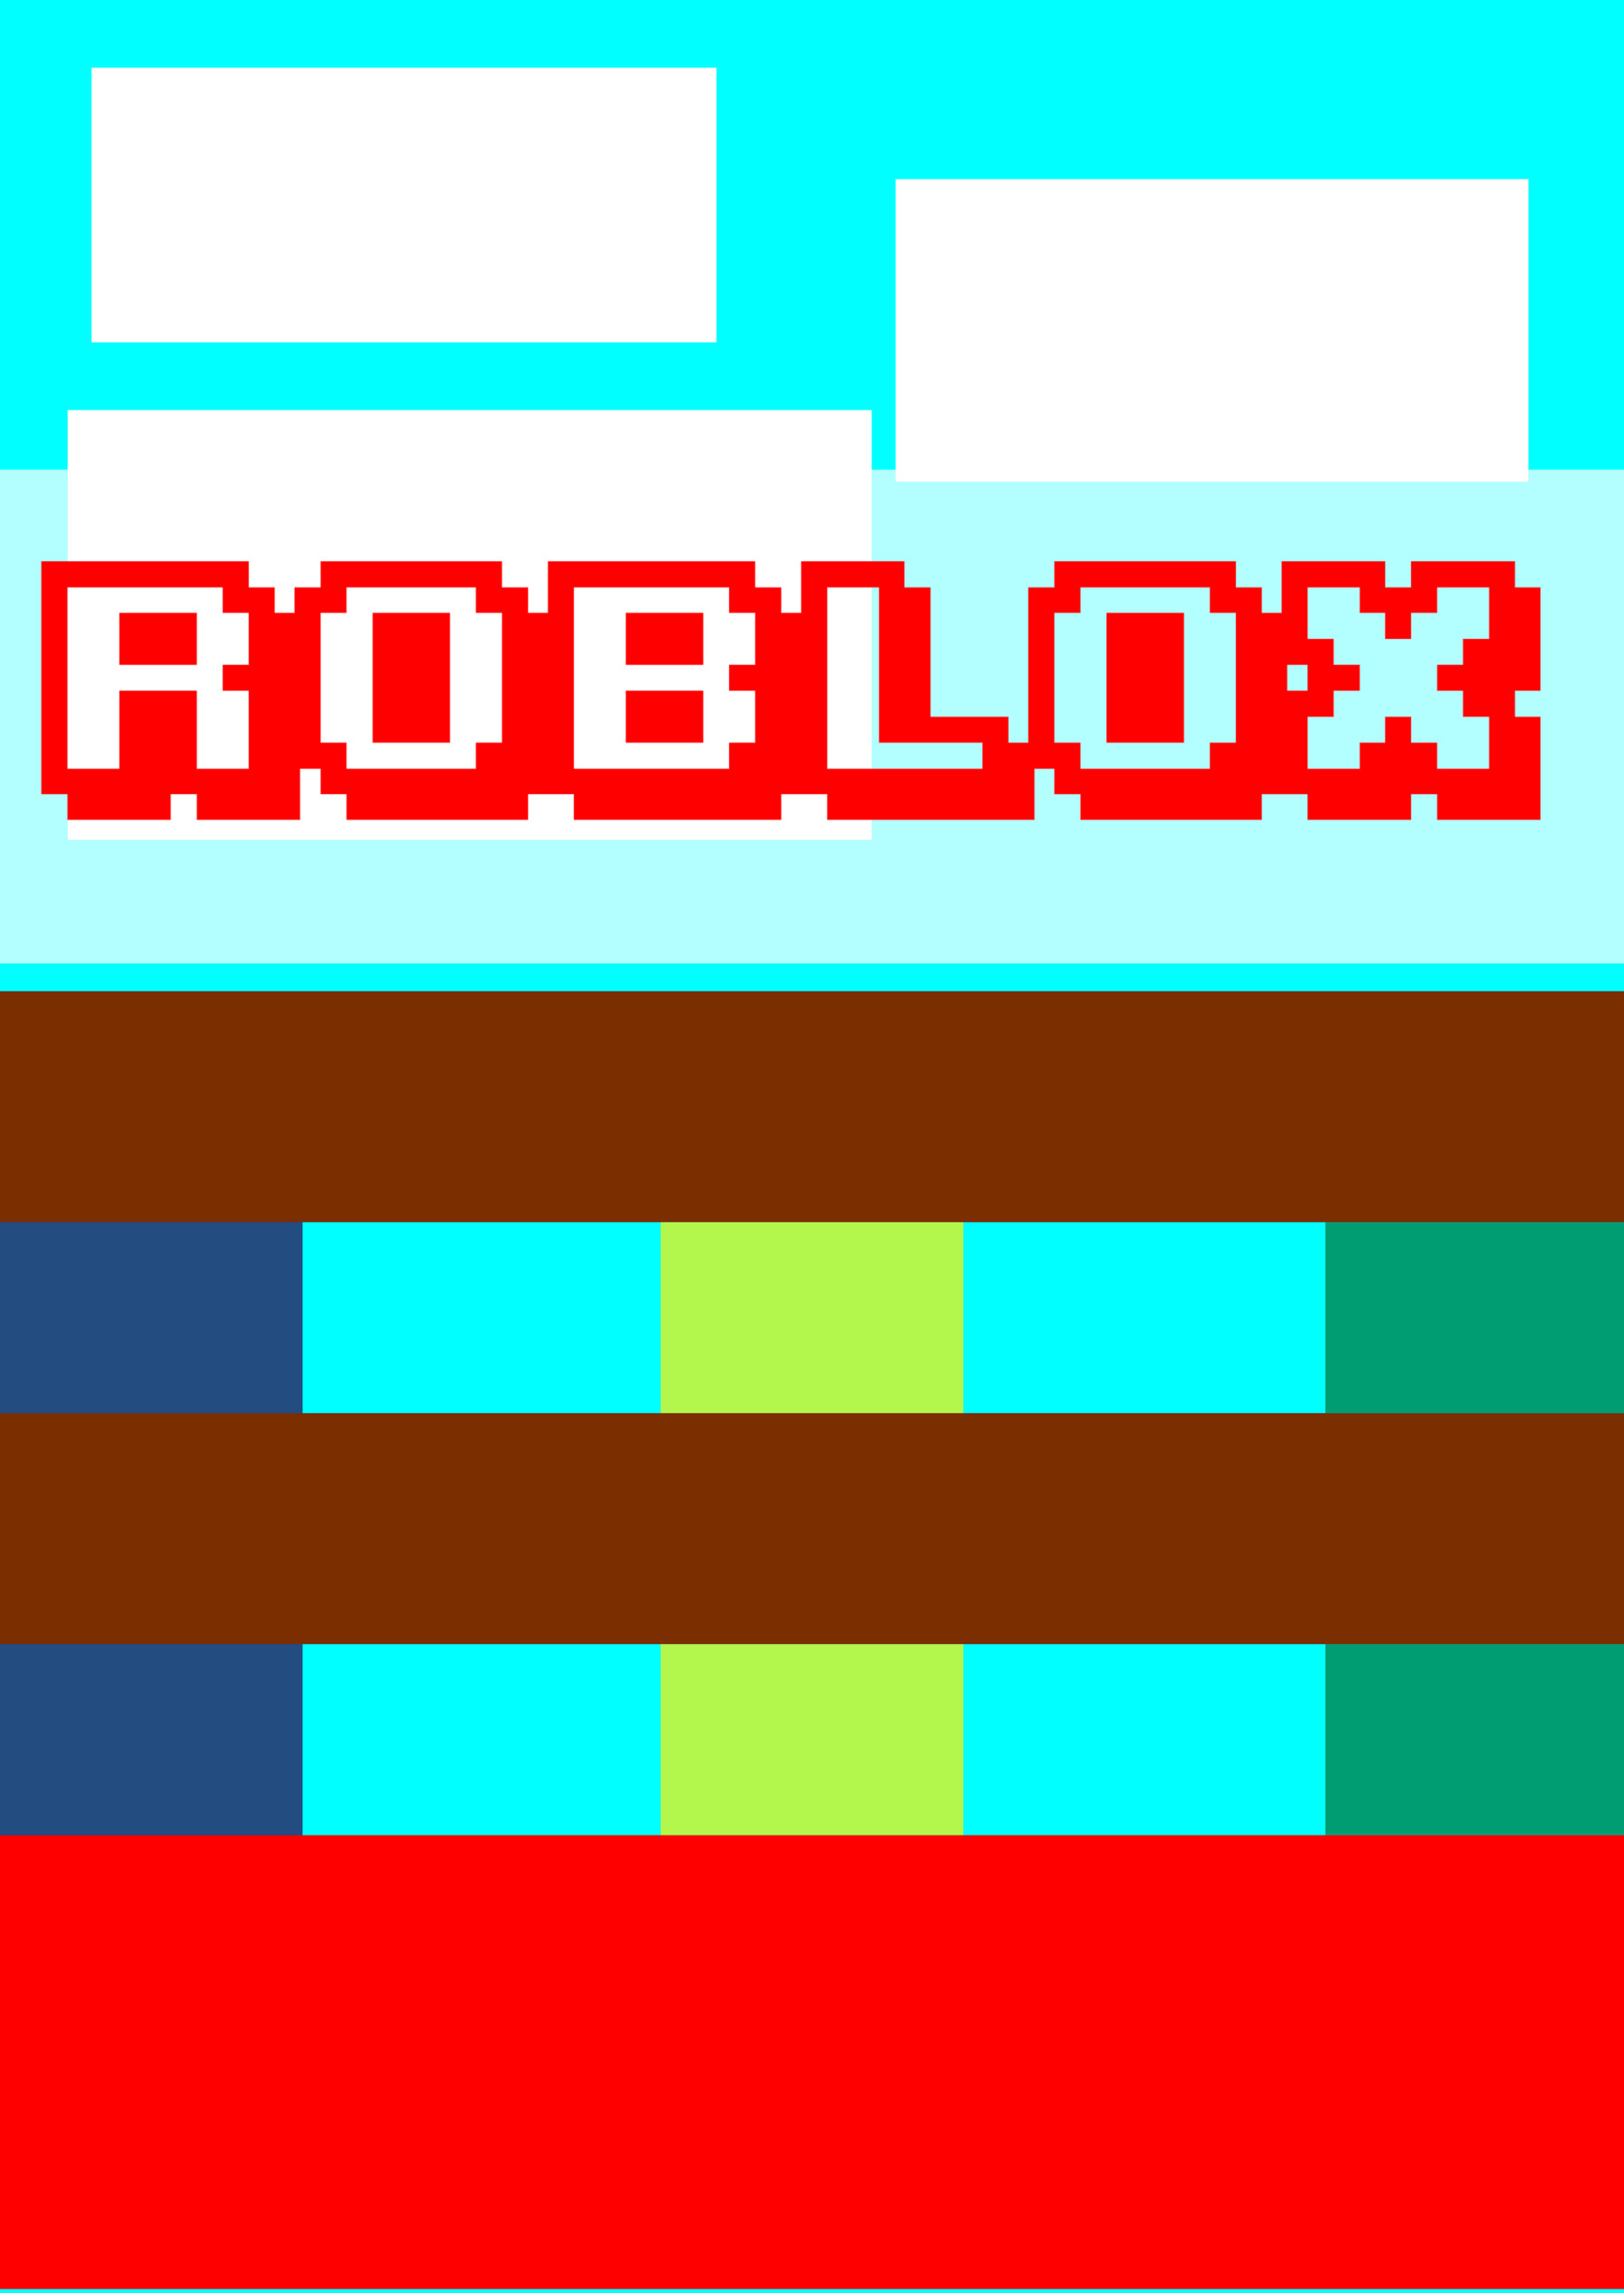 Roblox Com P - roblox studio low poly world timelapse 1